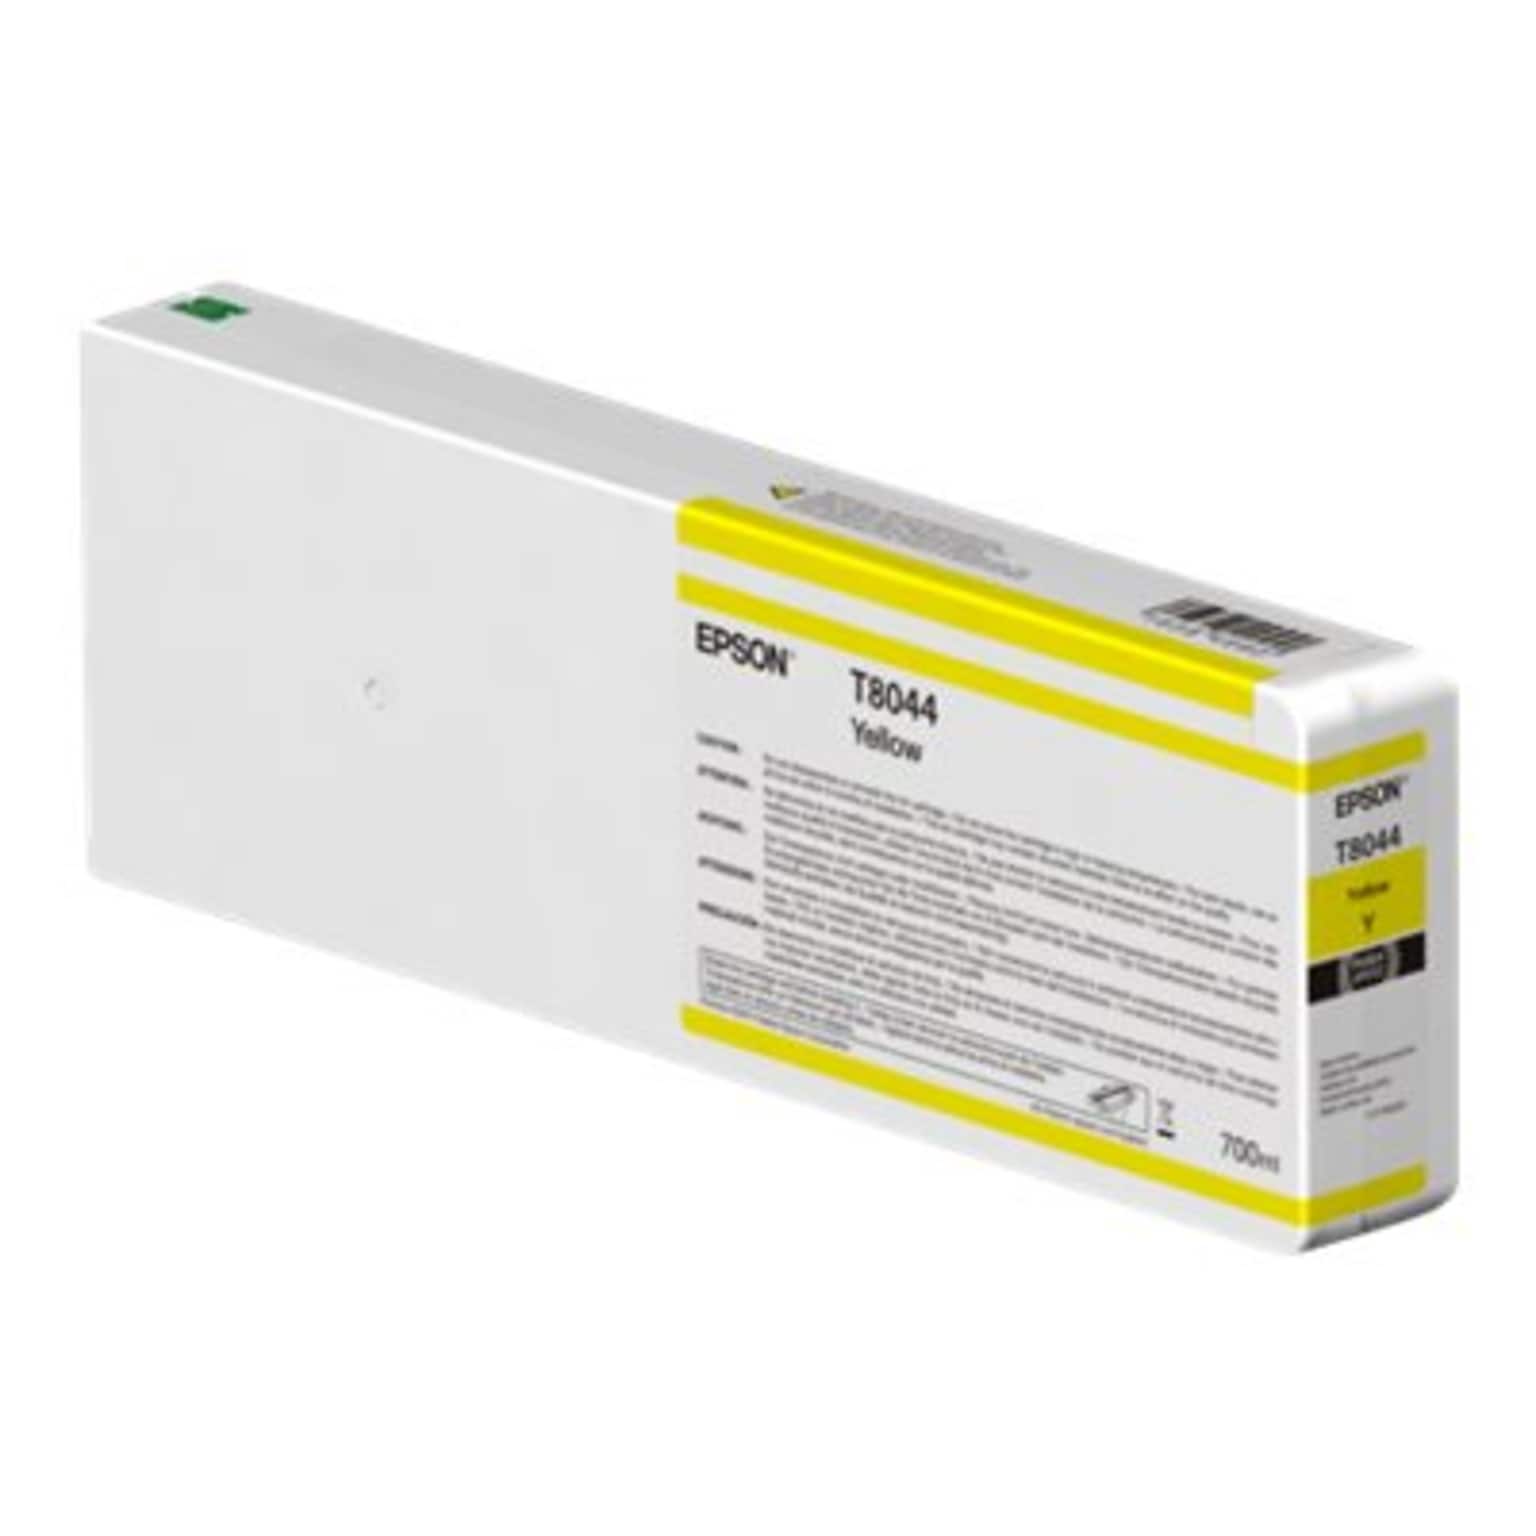 Epson T804400 Yellow Standard Yield Ink Cartridge